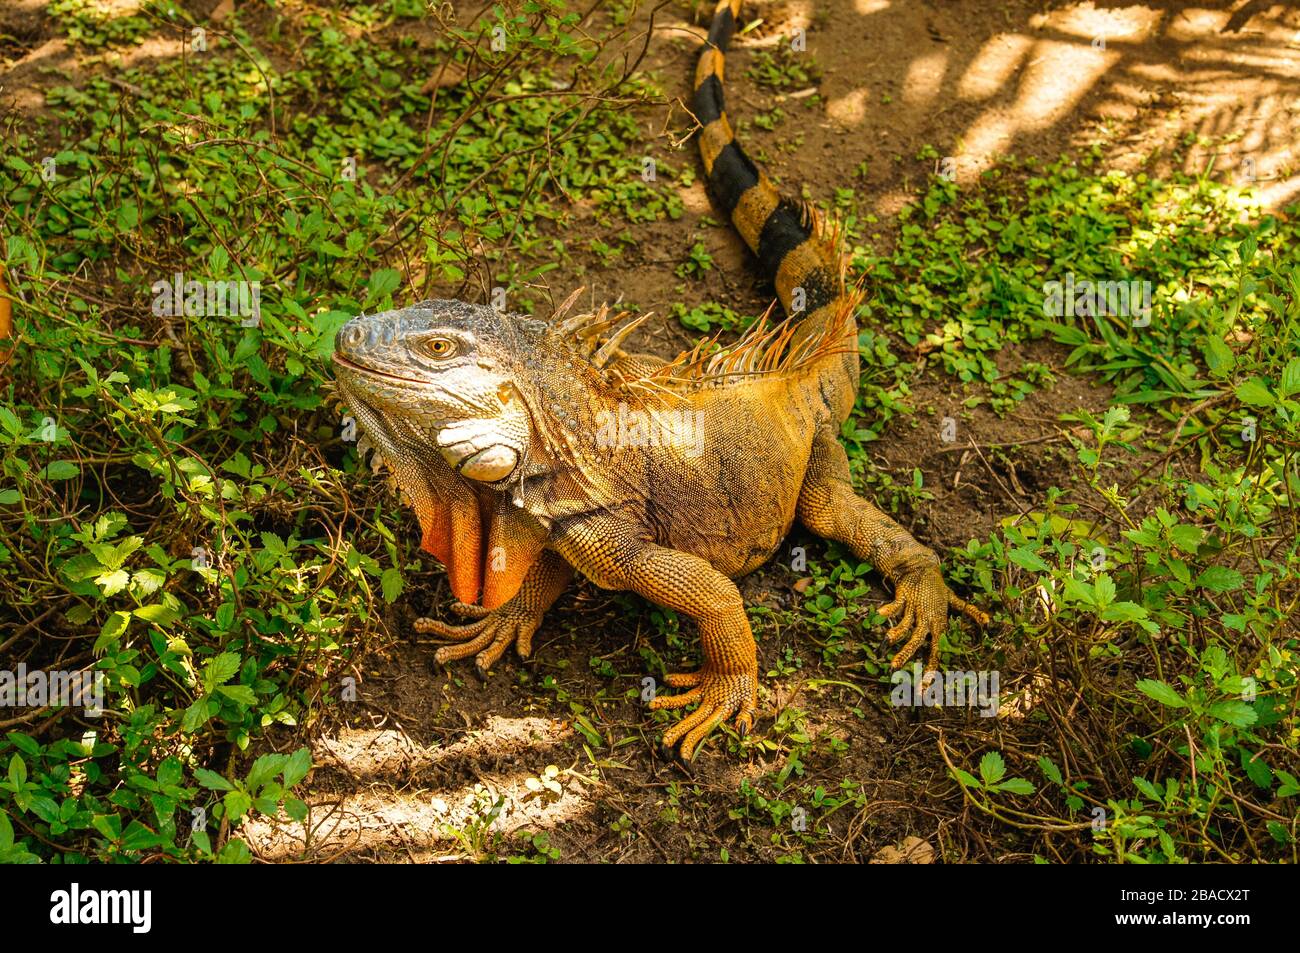 Male green iguana among the grass in Tortuguero, Costa Rica Stock Photo